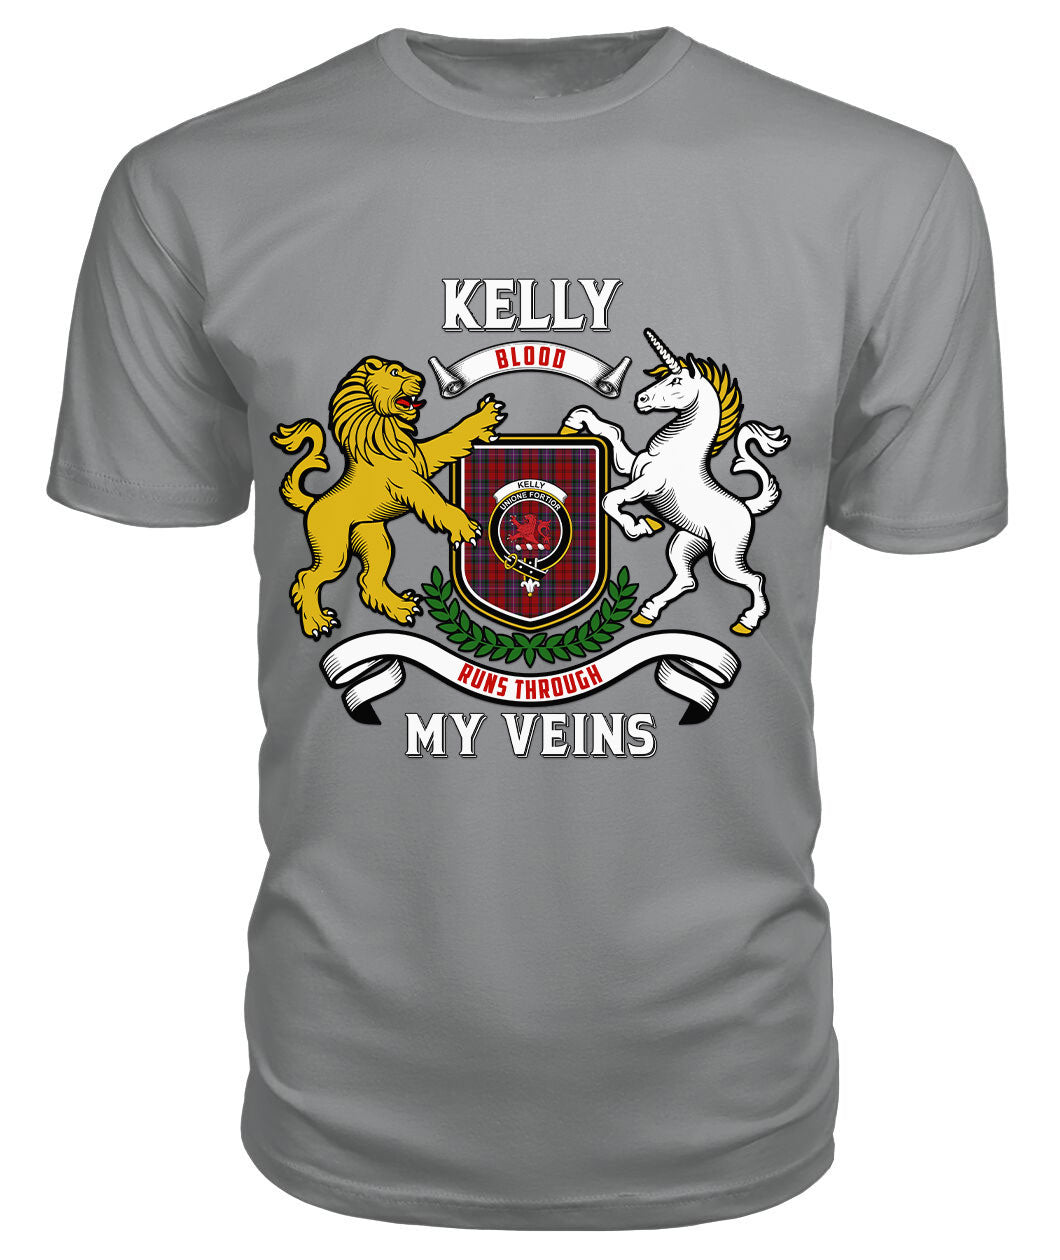 Kelly of Sleat Red Tartan Crest 2D T-shirt - Blood Runs Through My Veins Style